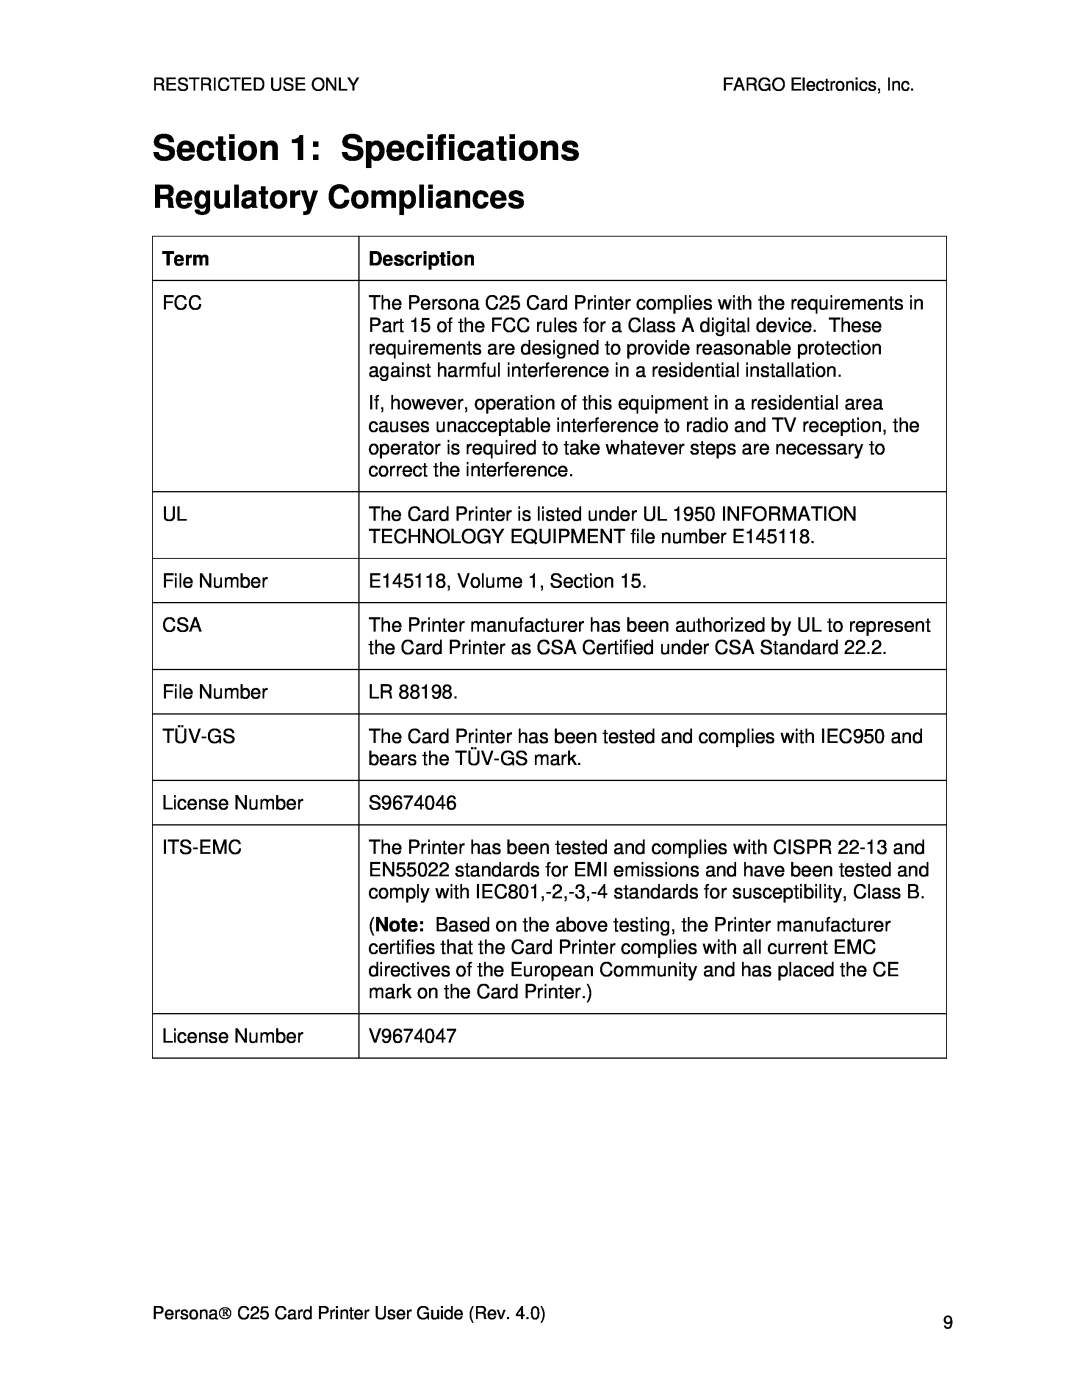 FARGO electronic S000256 manual Specifications, Regulatory Compliances 